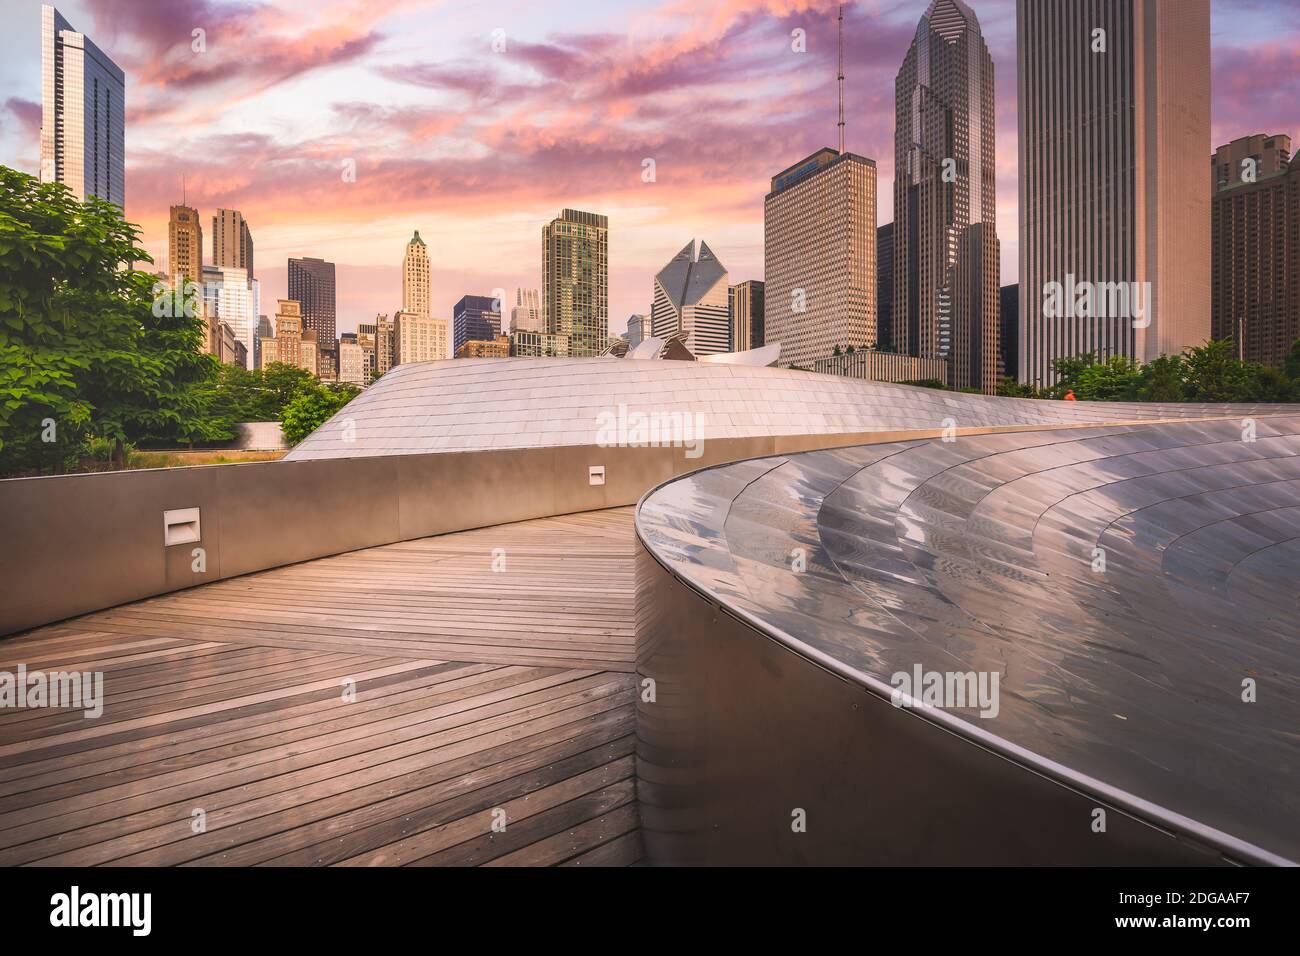 Chicago, Illinois - Aug 2020: The Chicago, Illinois skyline from a bridge in Millennium Park. Stock Photo